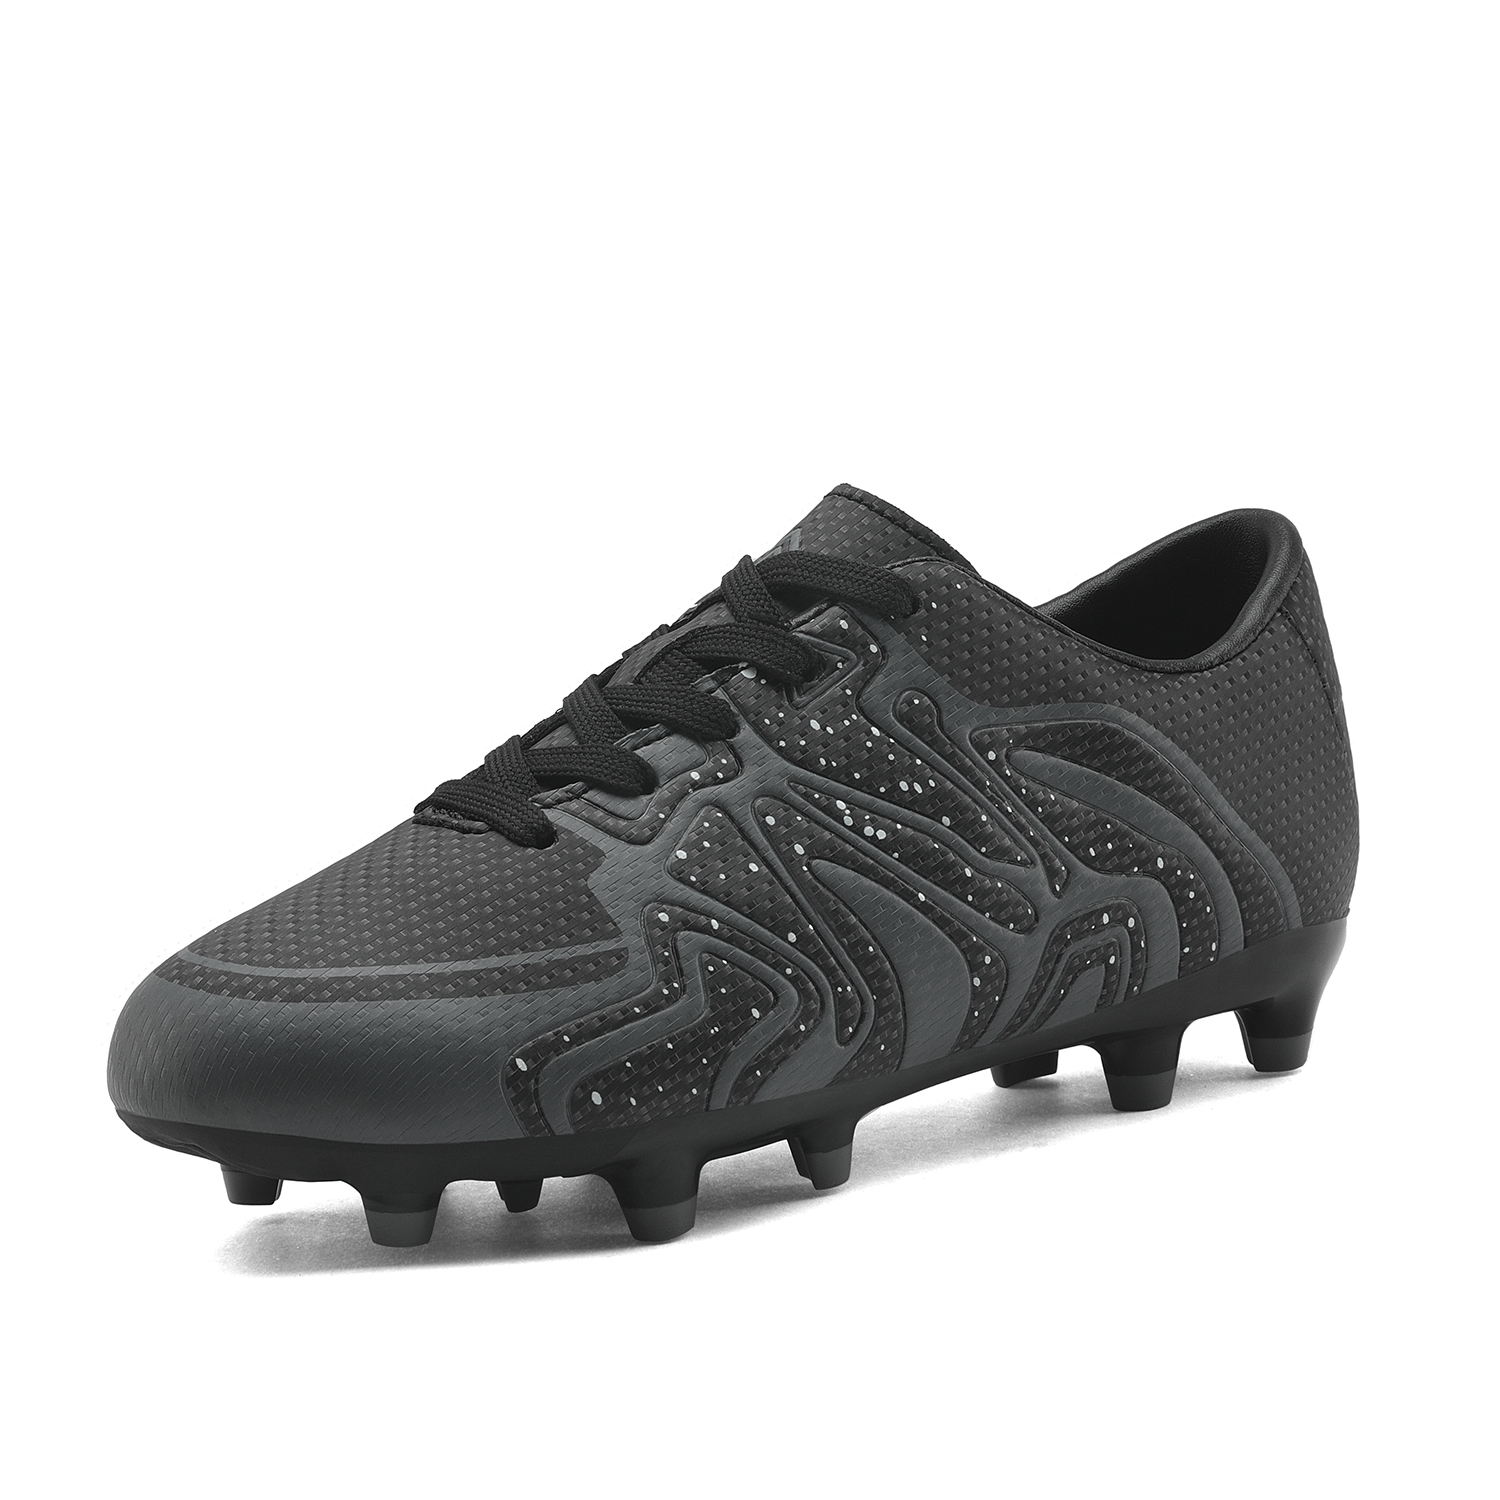 DREAM PAIRS Boys Girls 160472-K Black Dark Grey White Soccer Football Cleats Shoes Size 6 M US Big Kid